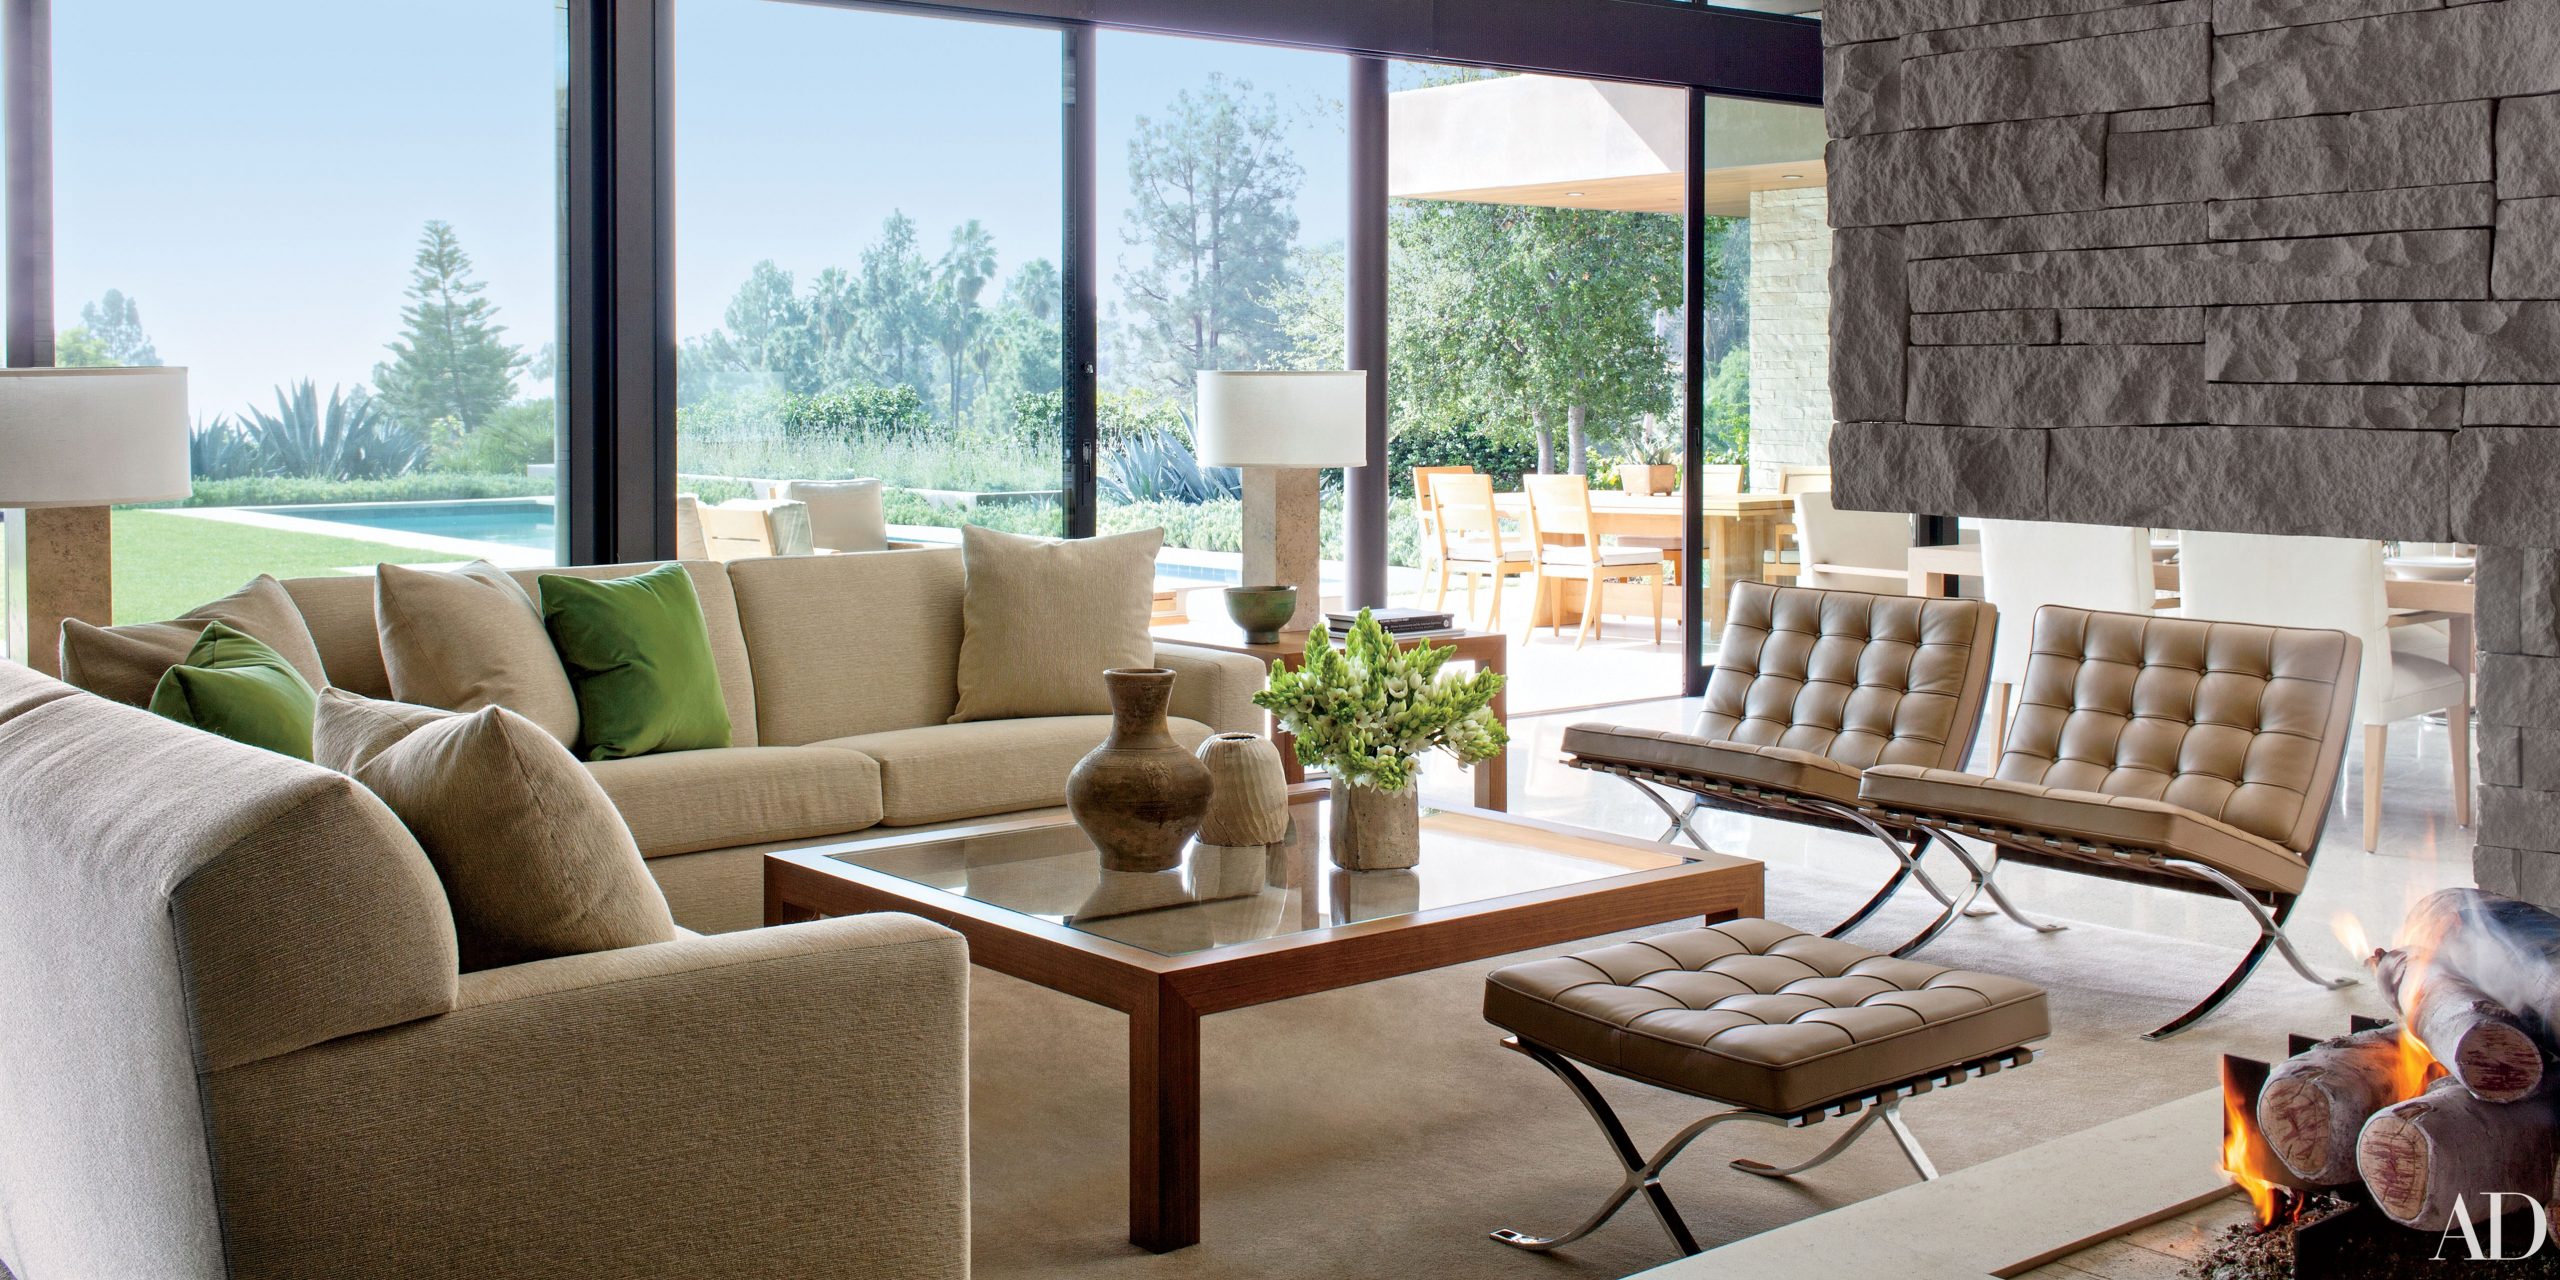 Proficient interior design services for your decor